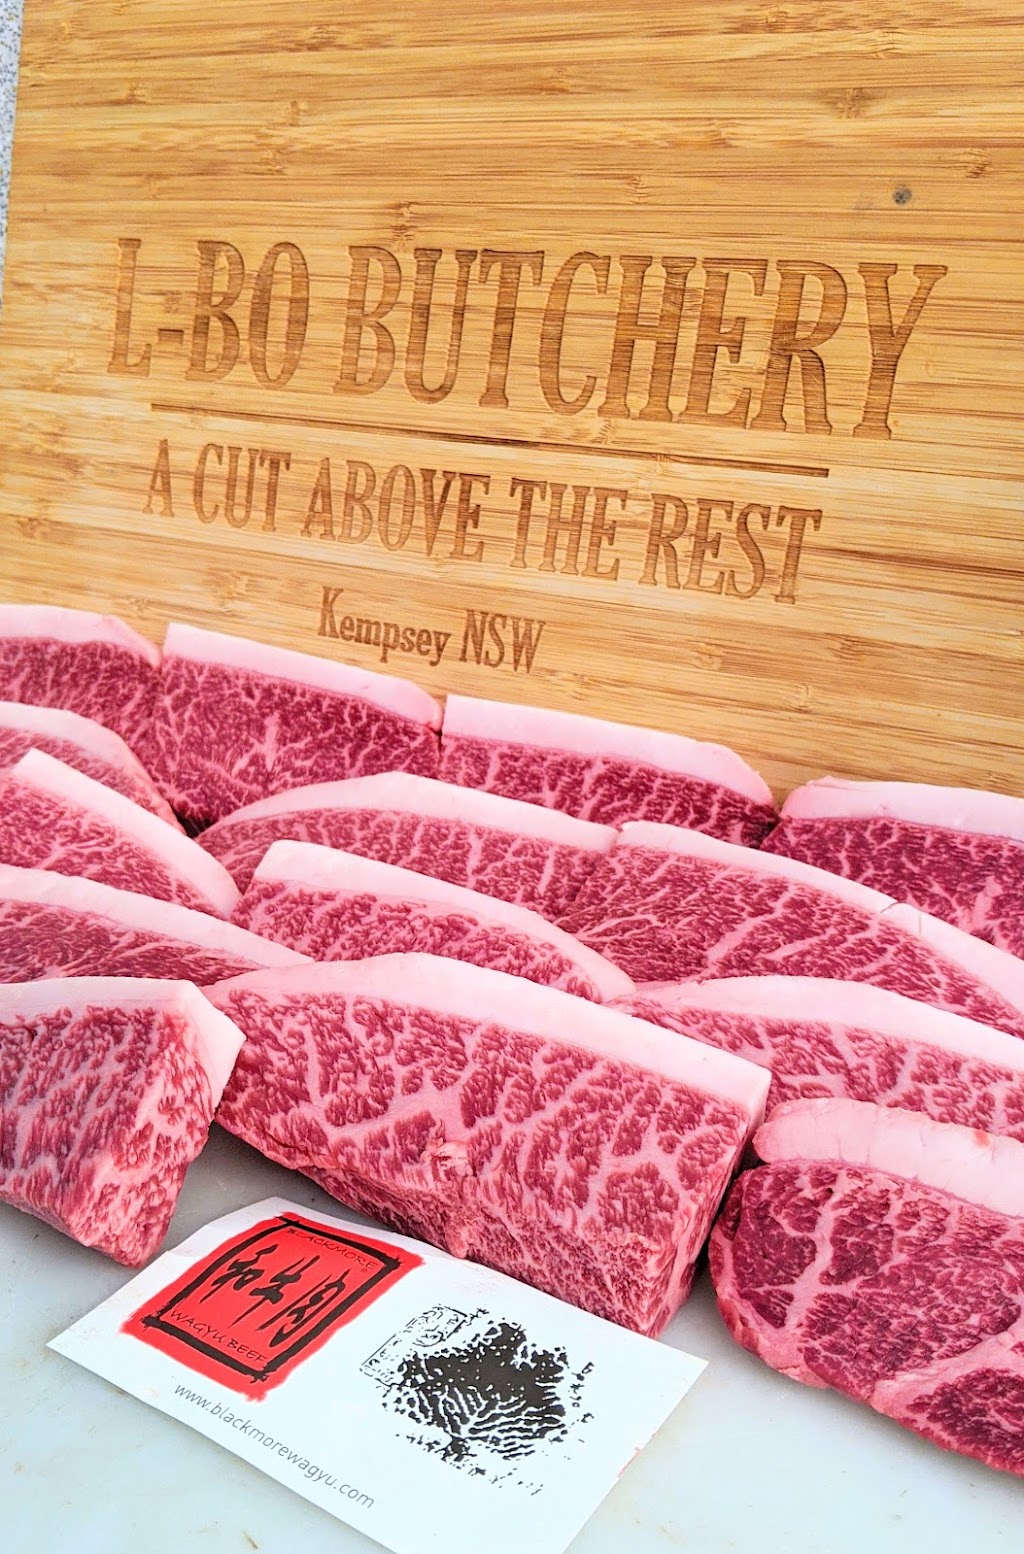 L-Bo Butchery | 56 Elbow St, Kempsey NSW 2440, Australia | Phone: (02) 6562 5109